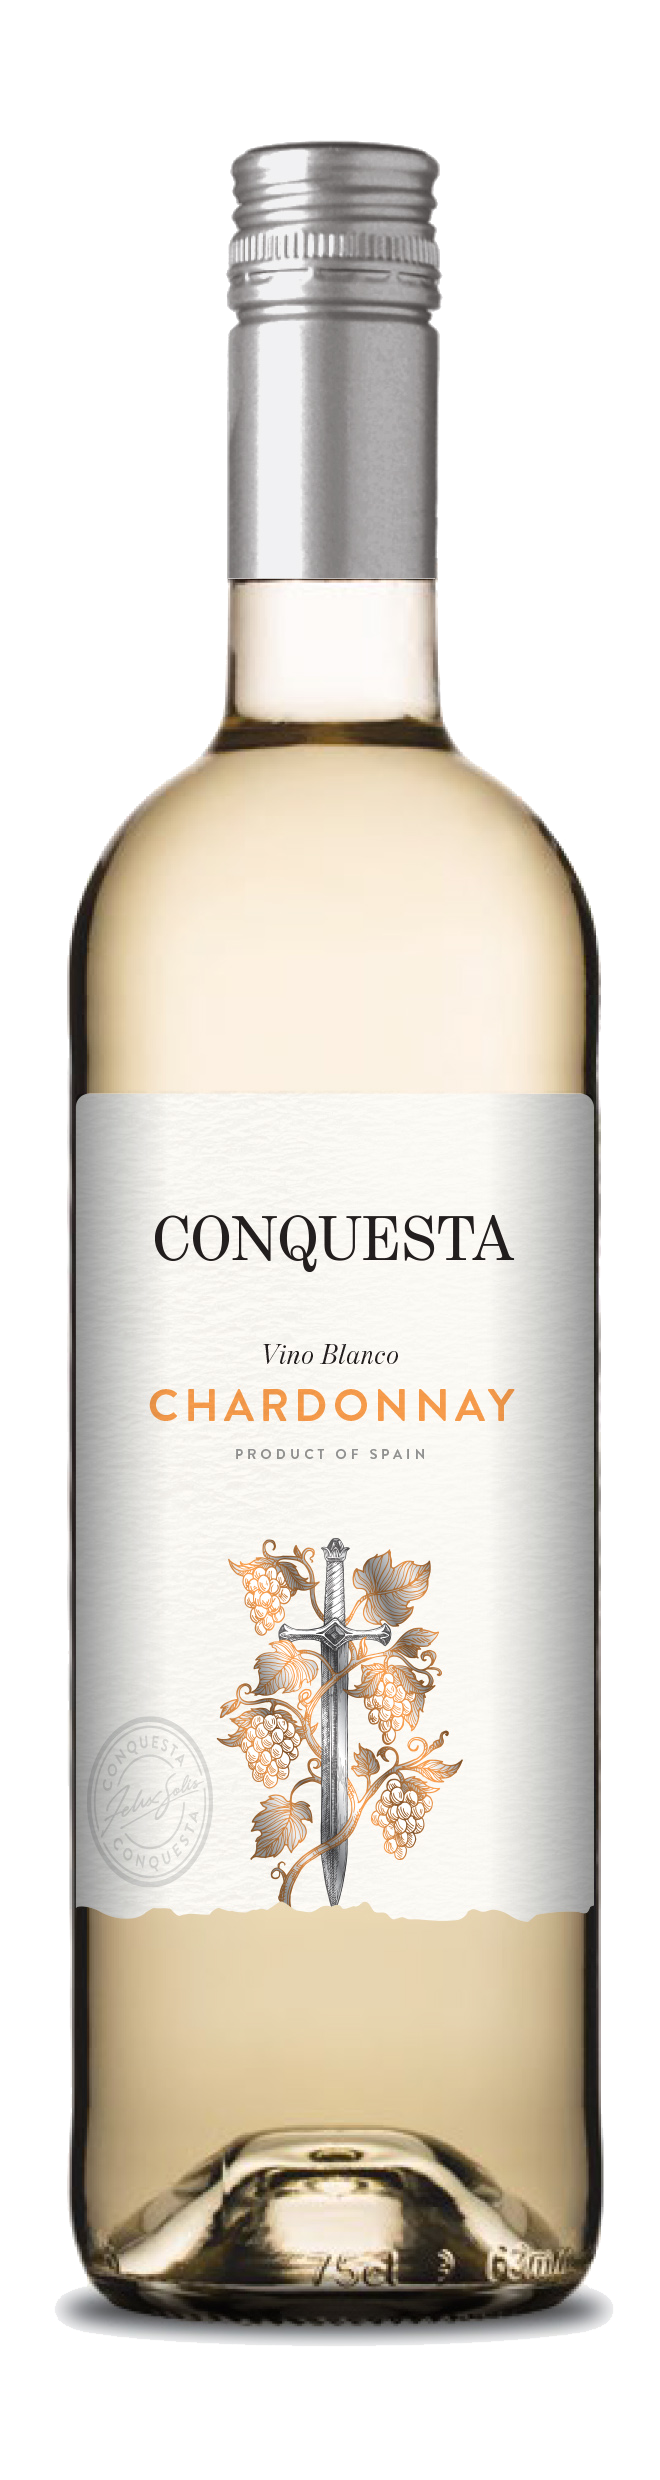 Conquesta Chardonnay